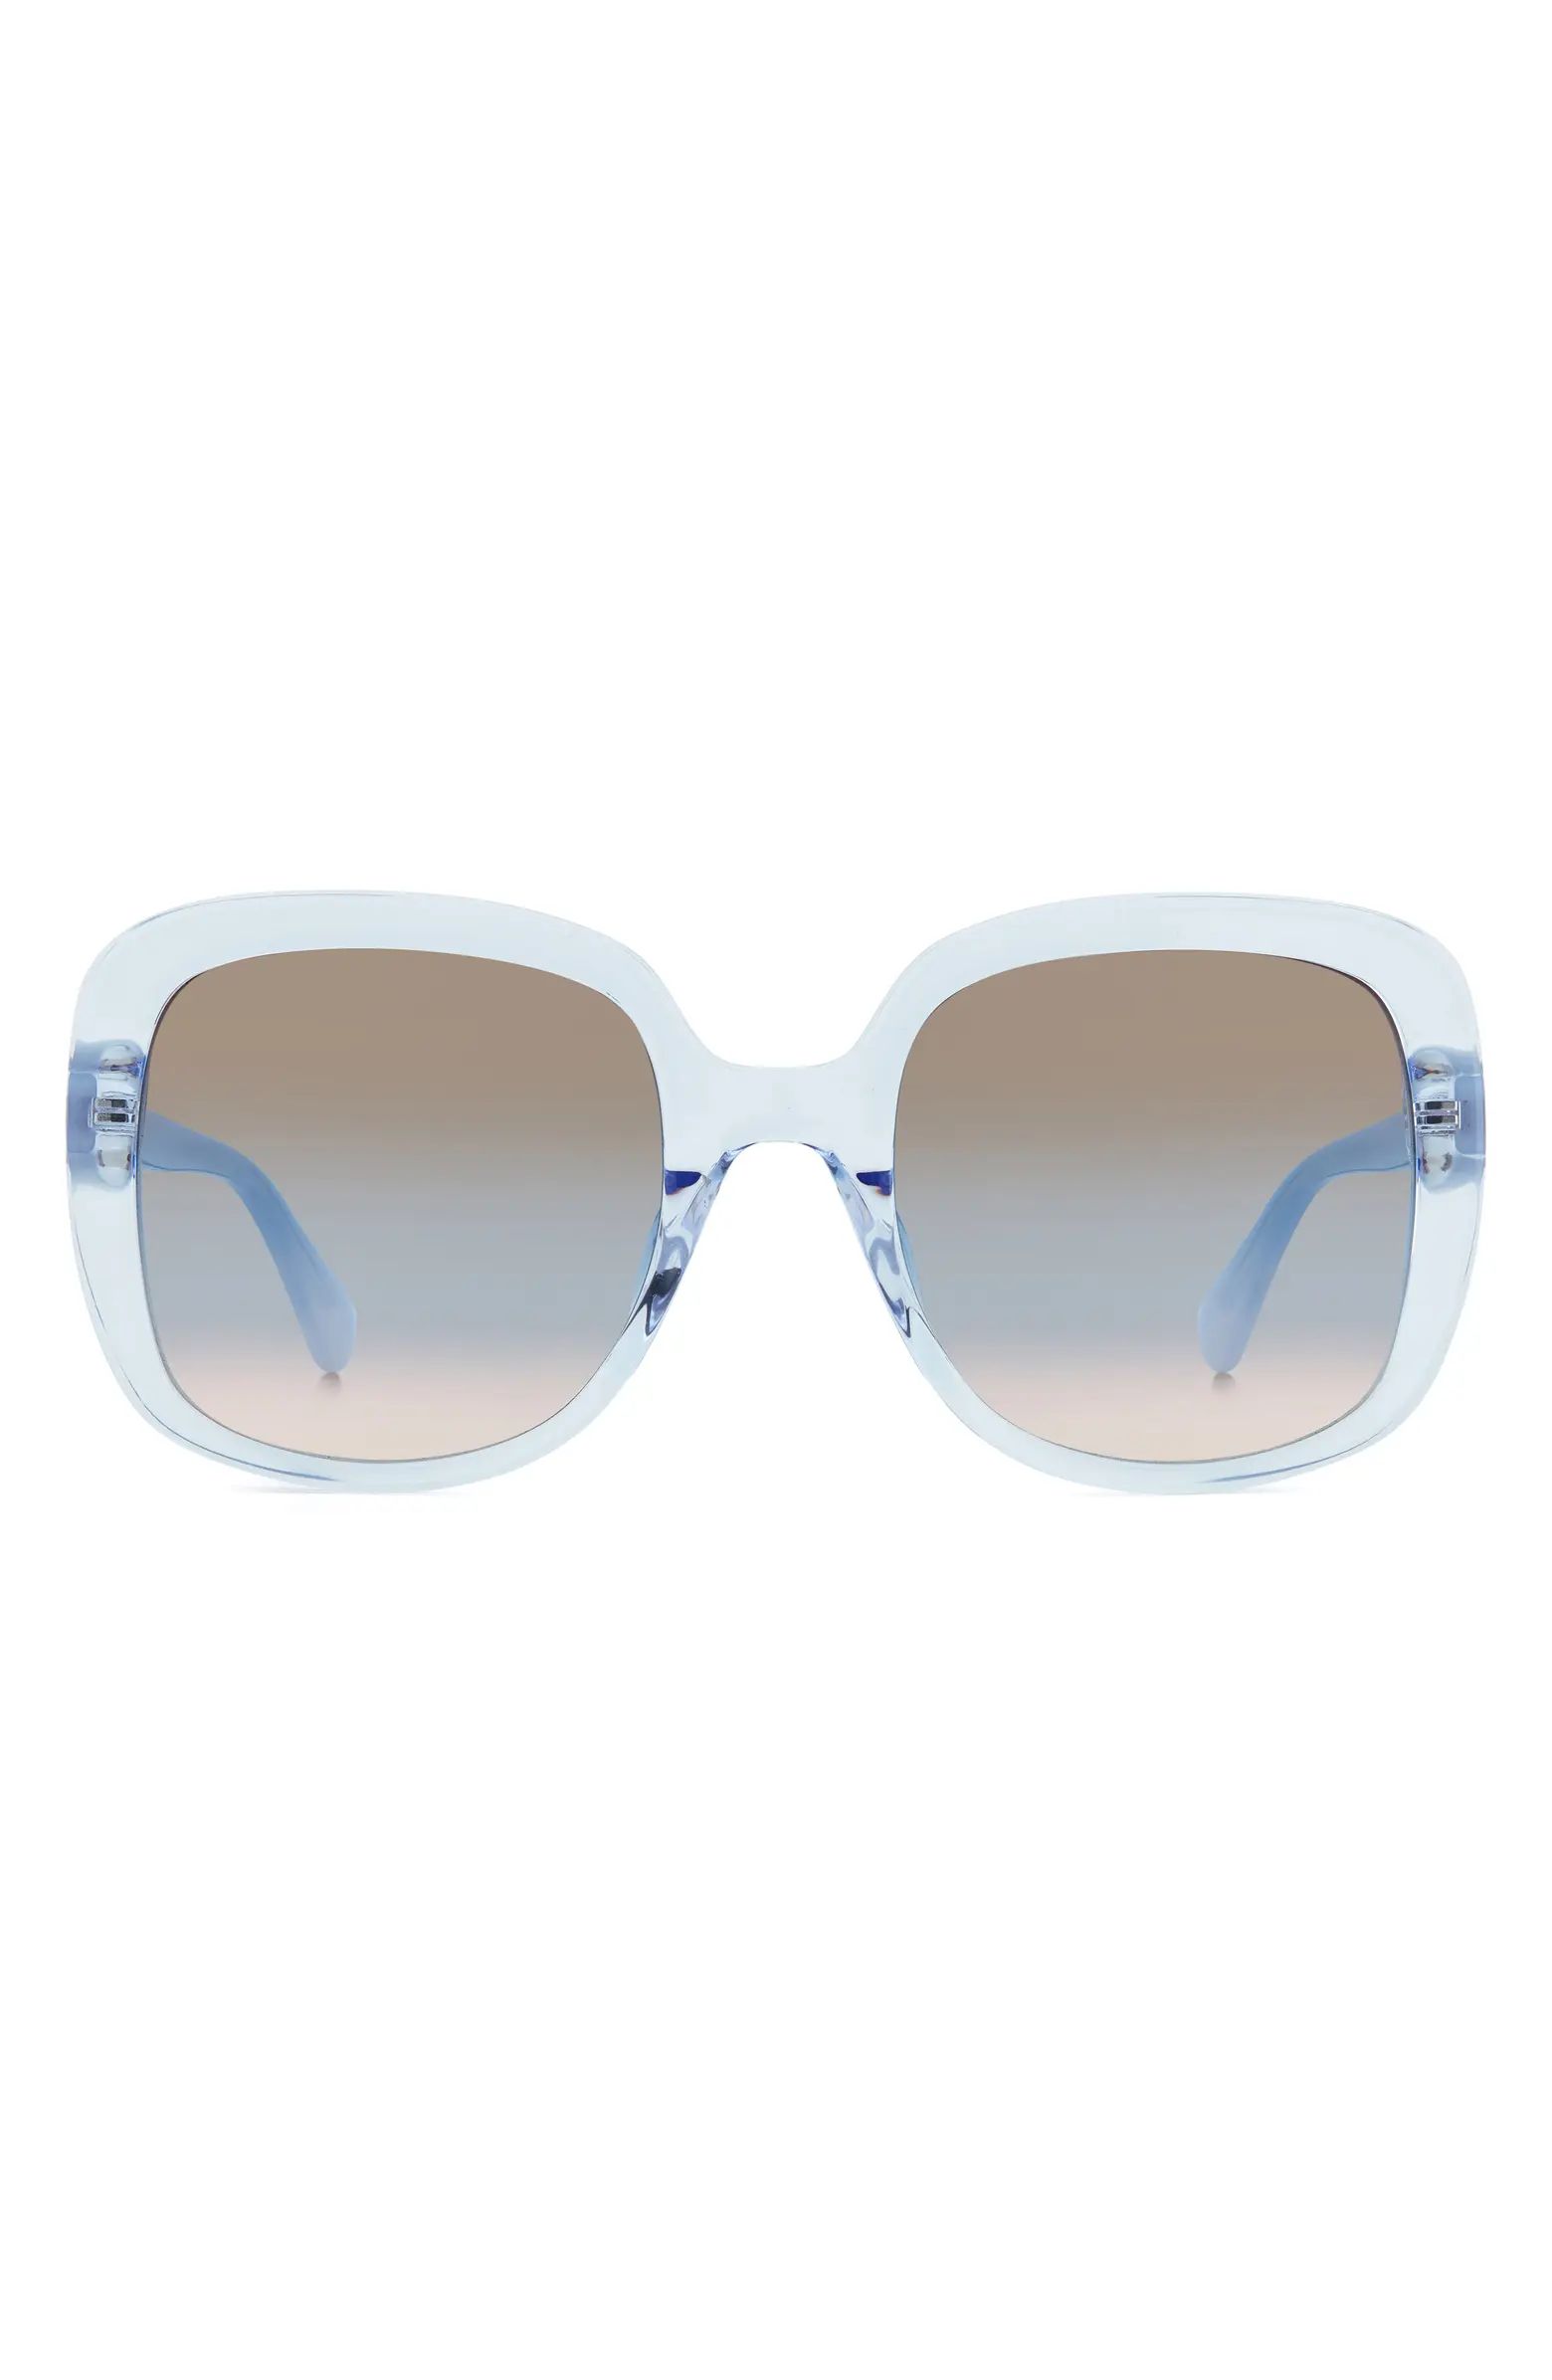 wenonags 56mm square sunglasses | Nordstrom